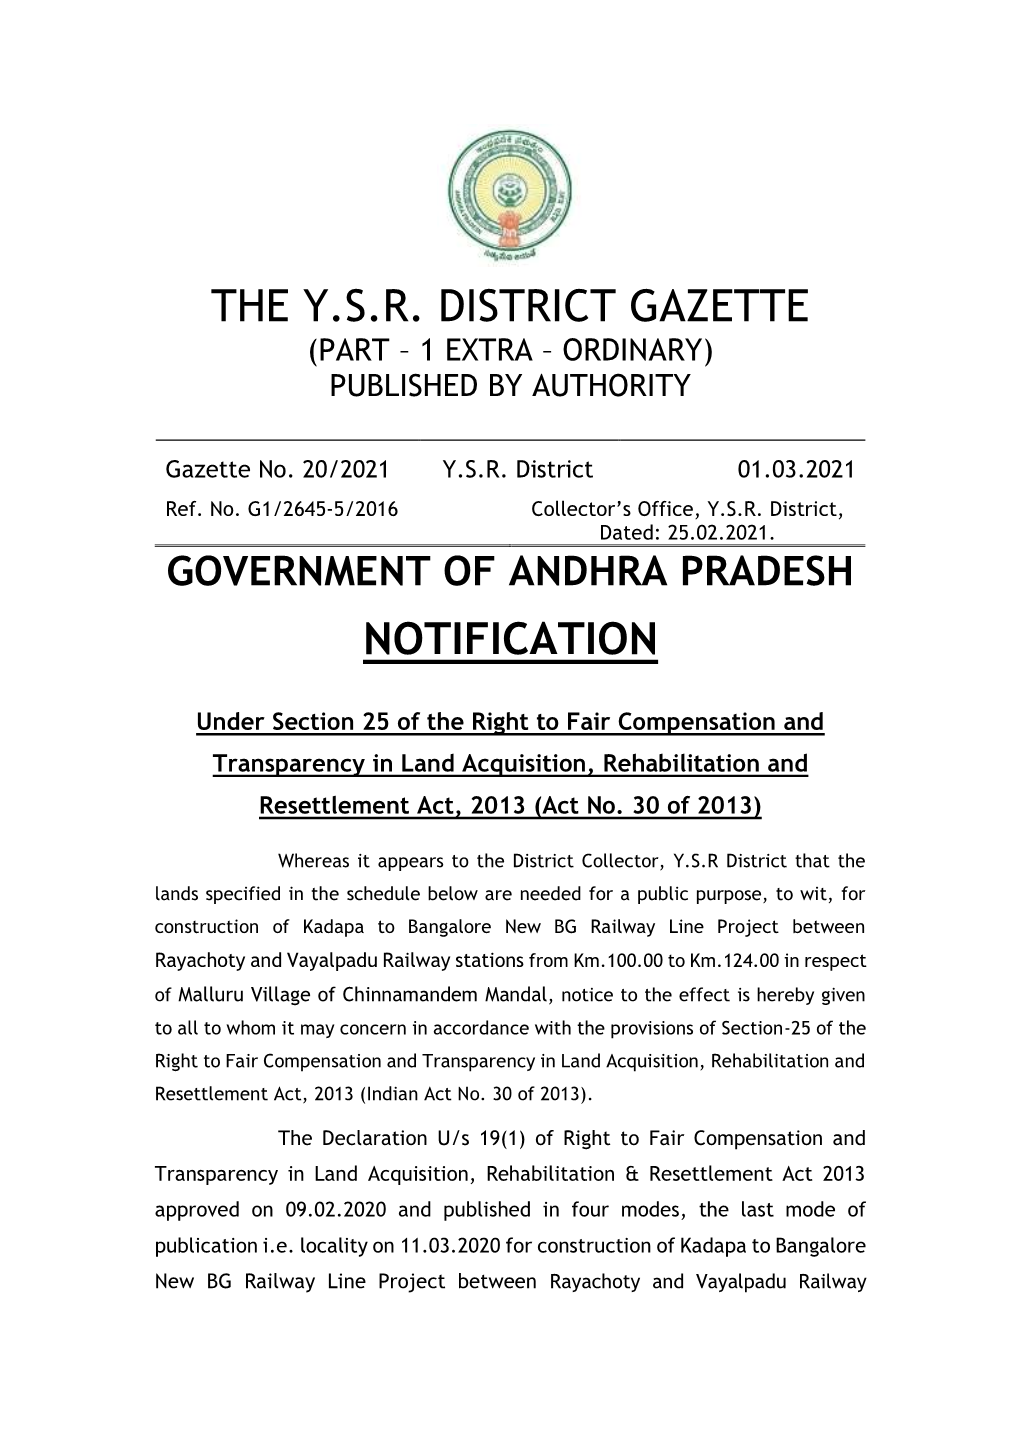 The Y.S.R. District Gazette Notification